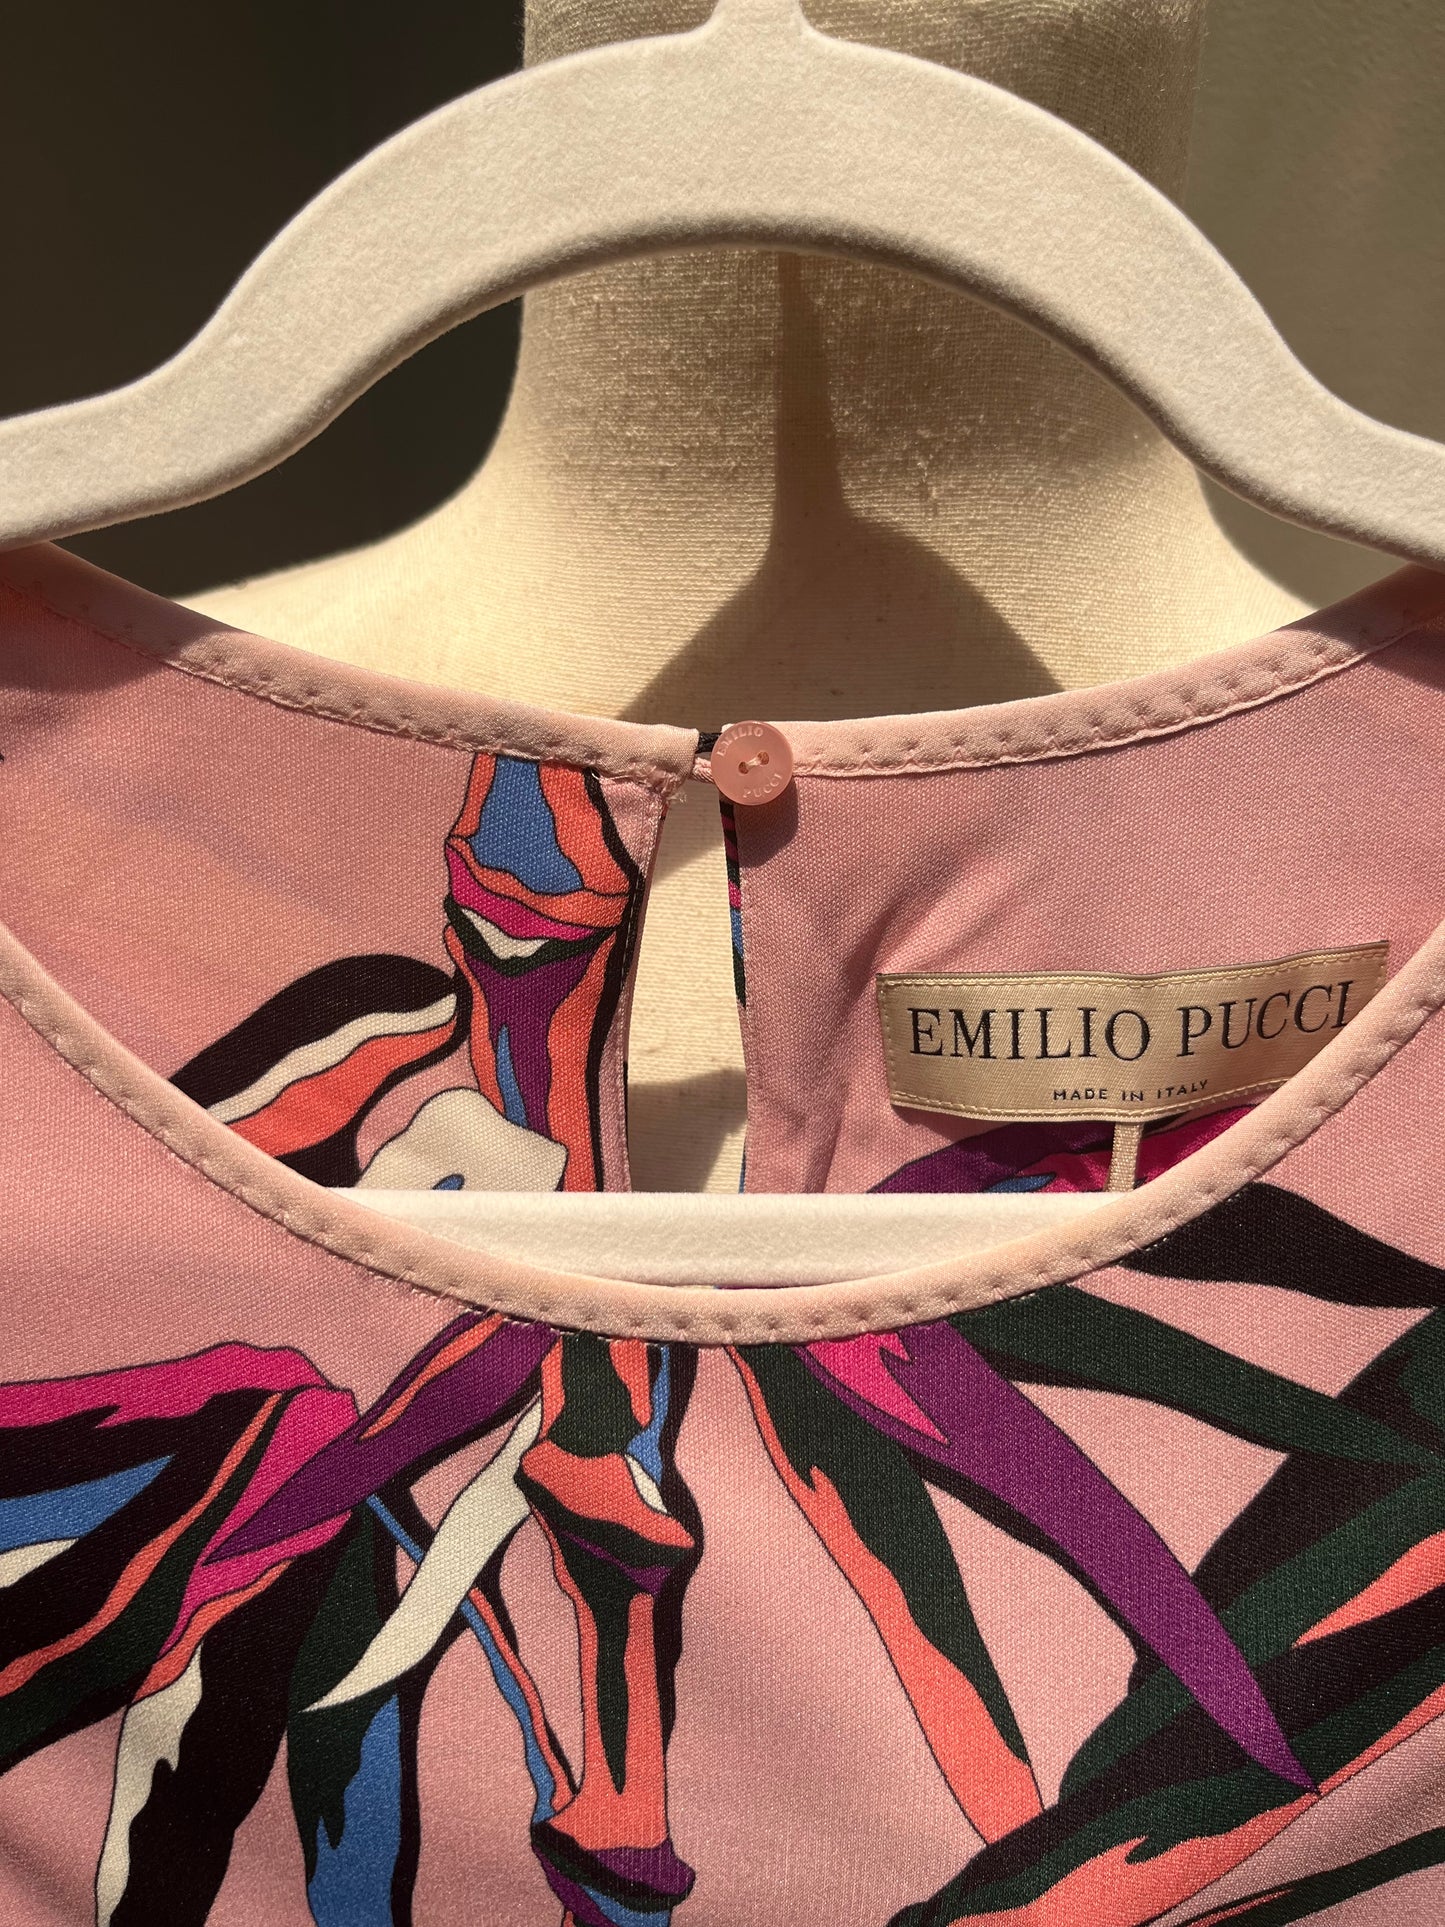 Emilio Pucci Pink Tropical Palm Leaf Printed Dress 12